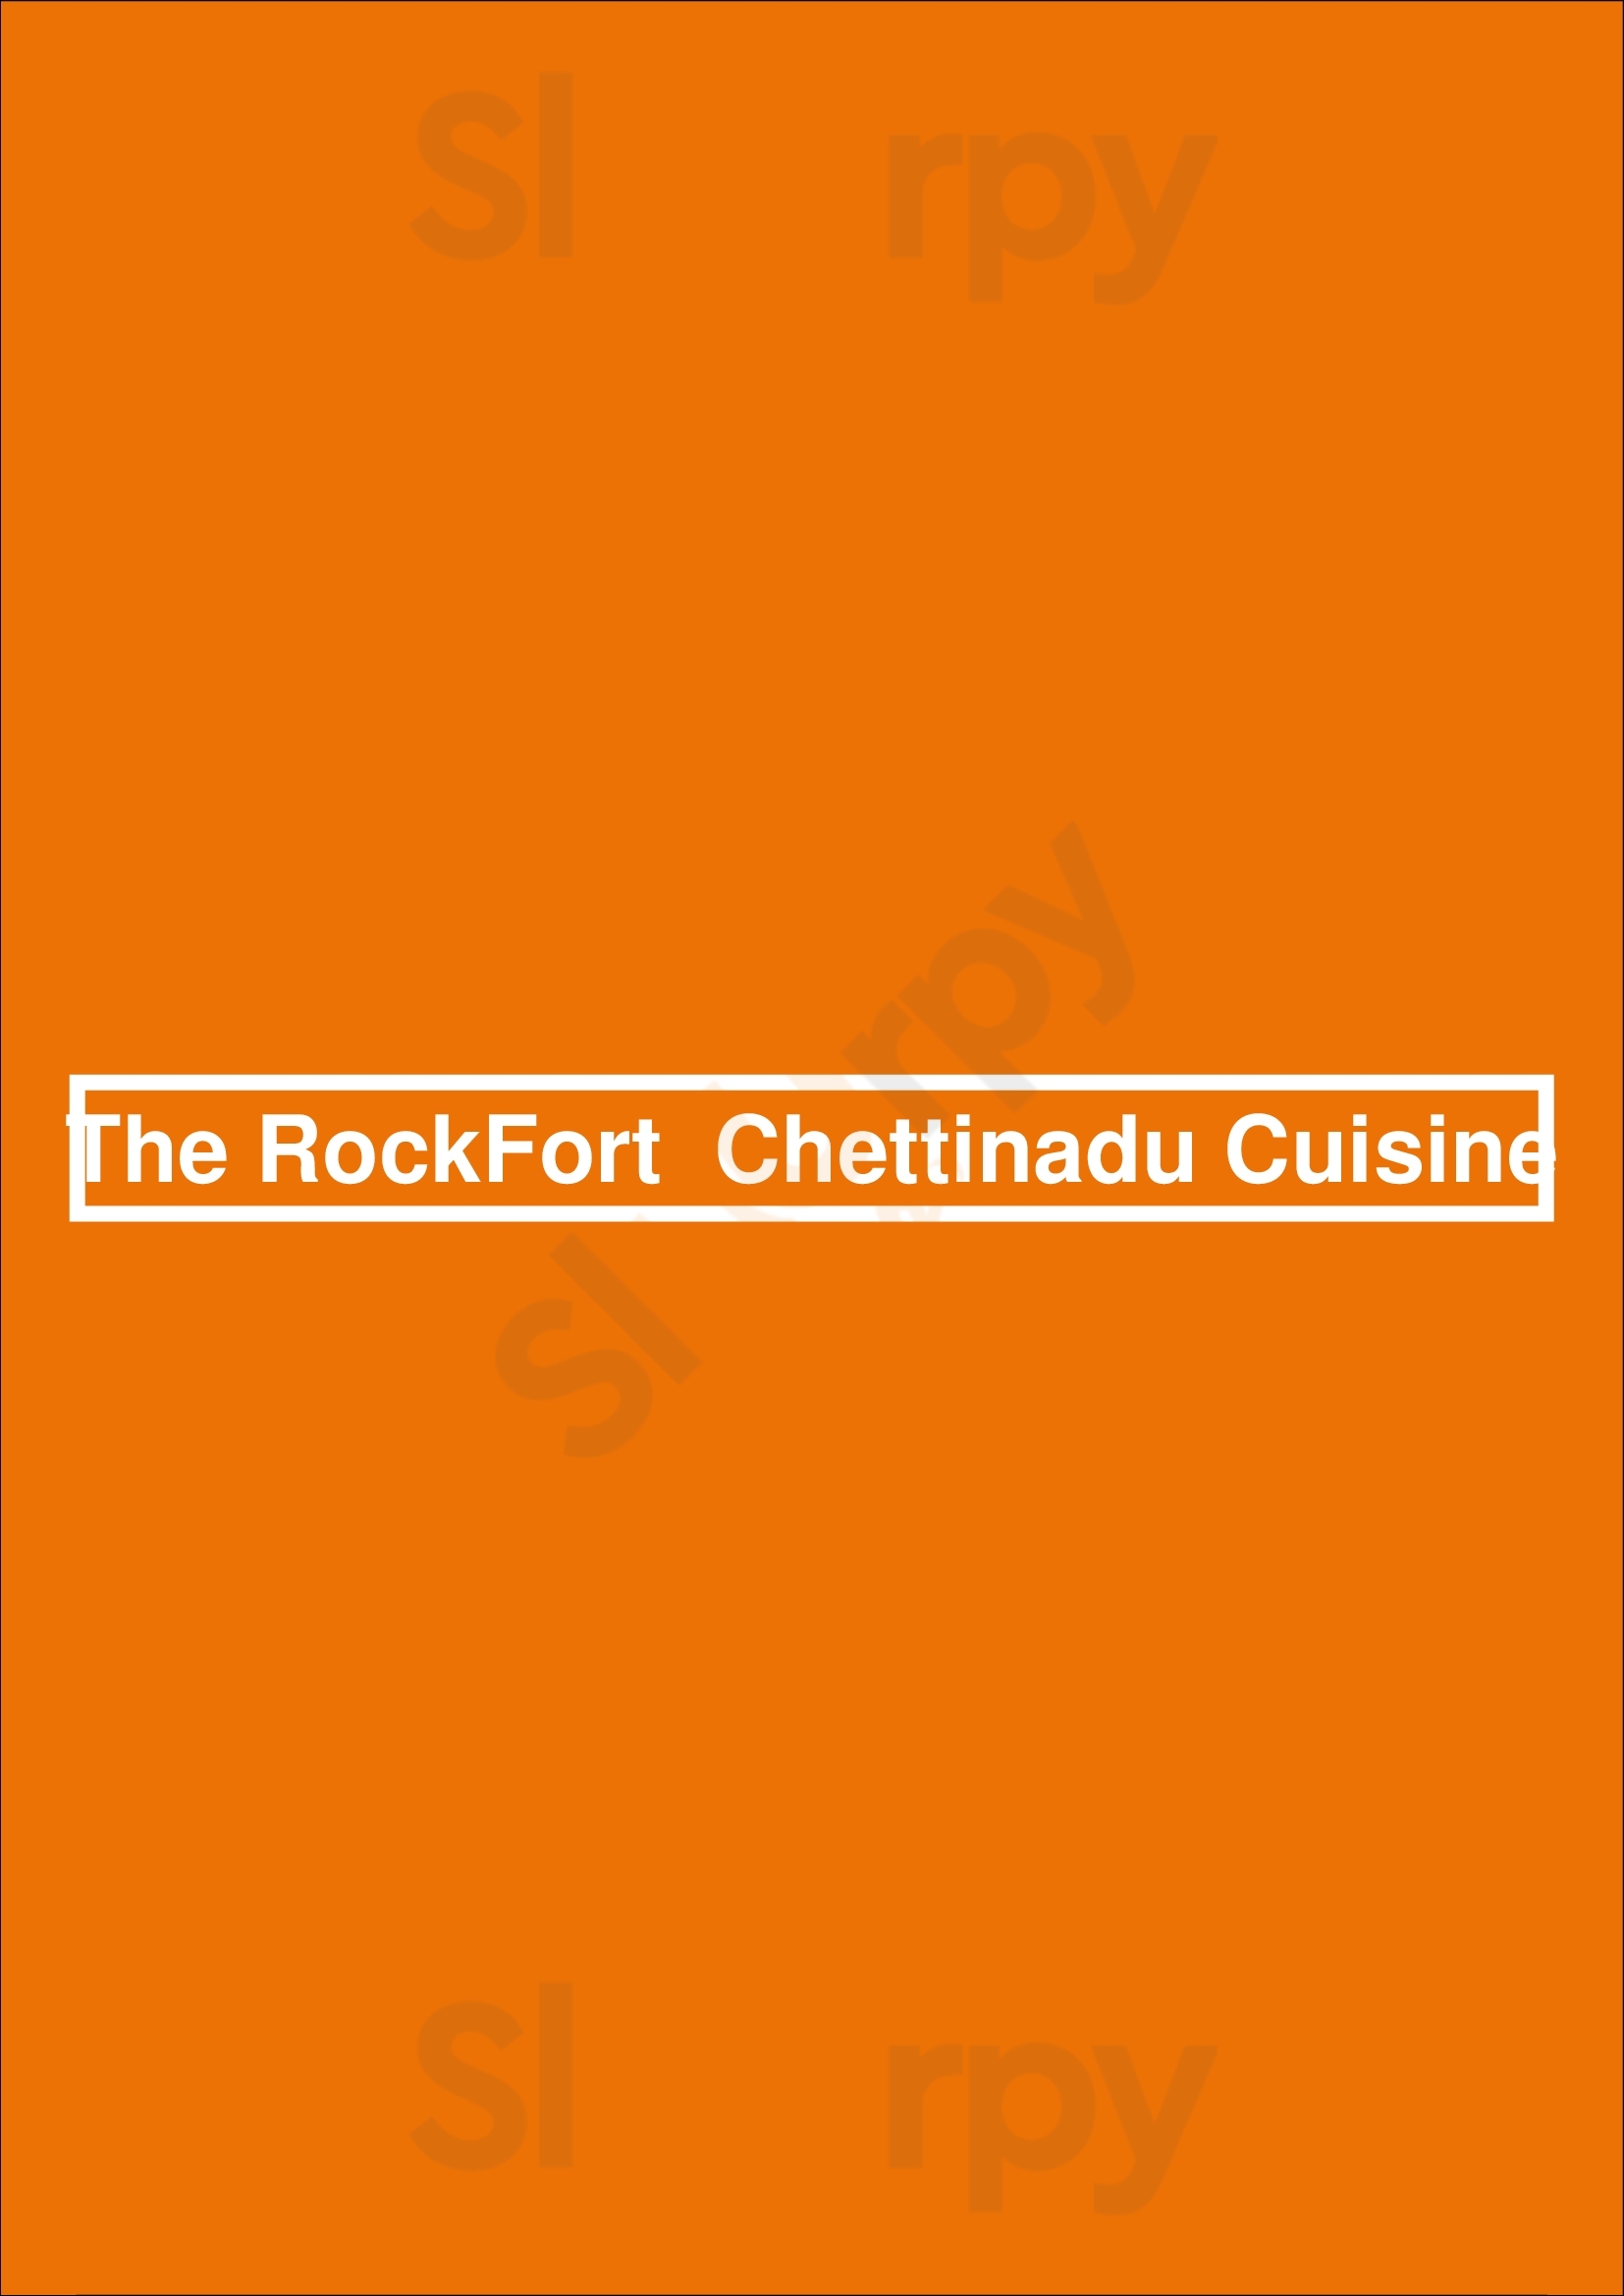 The Rockfort  Chettinadu Cuisine Calgary Menu - 1